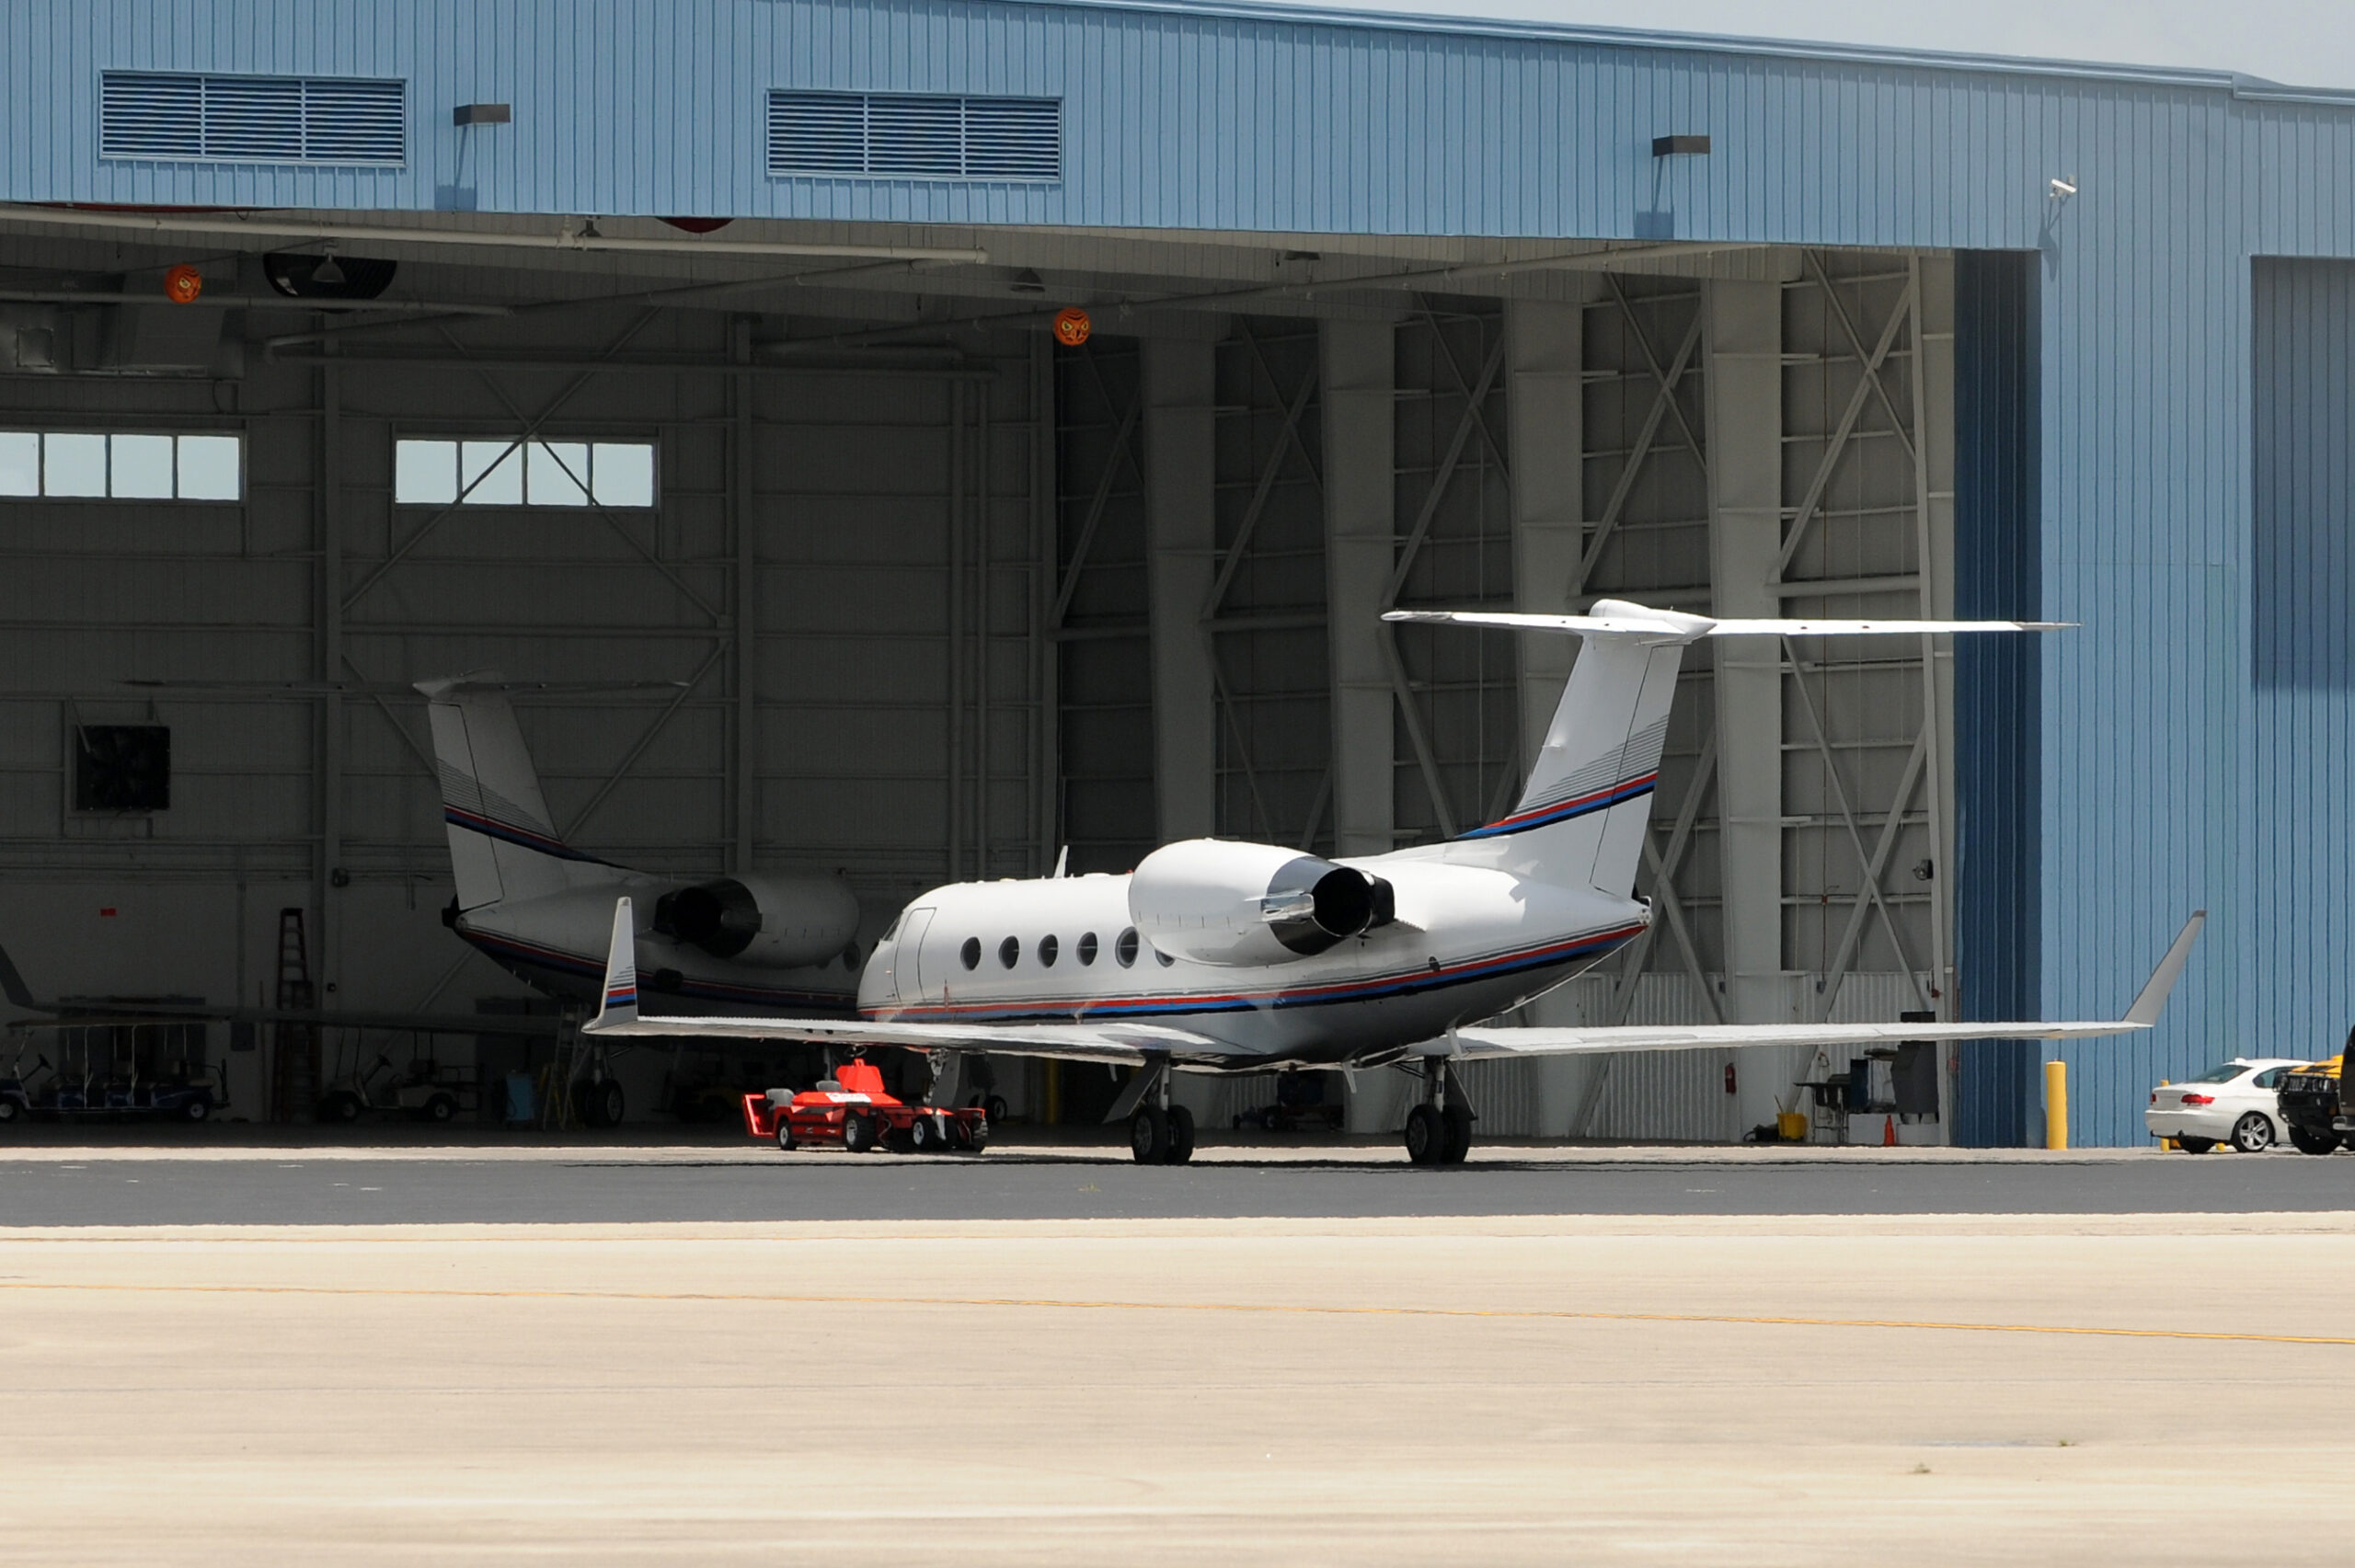 Aircraft in Hangar Dallas Executive airport